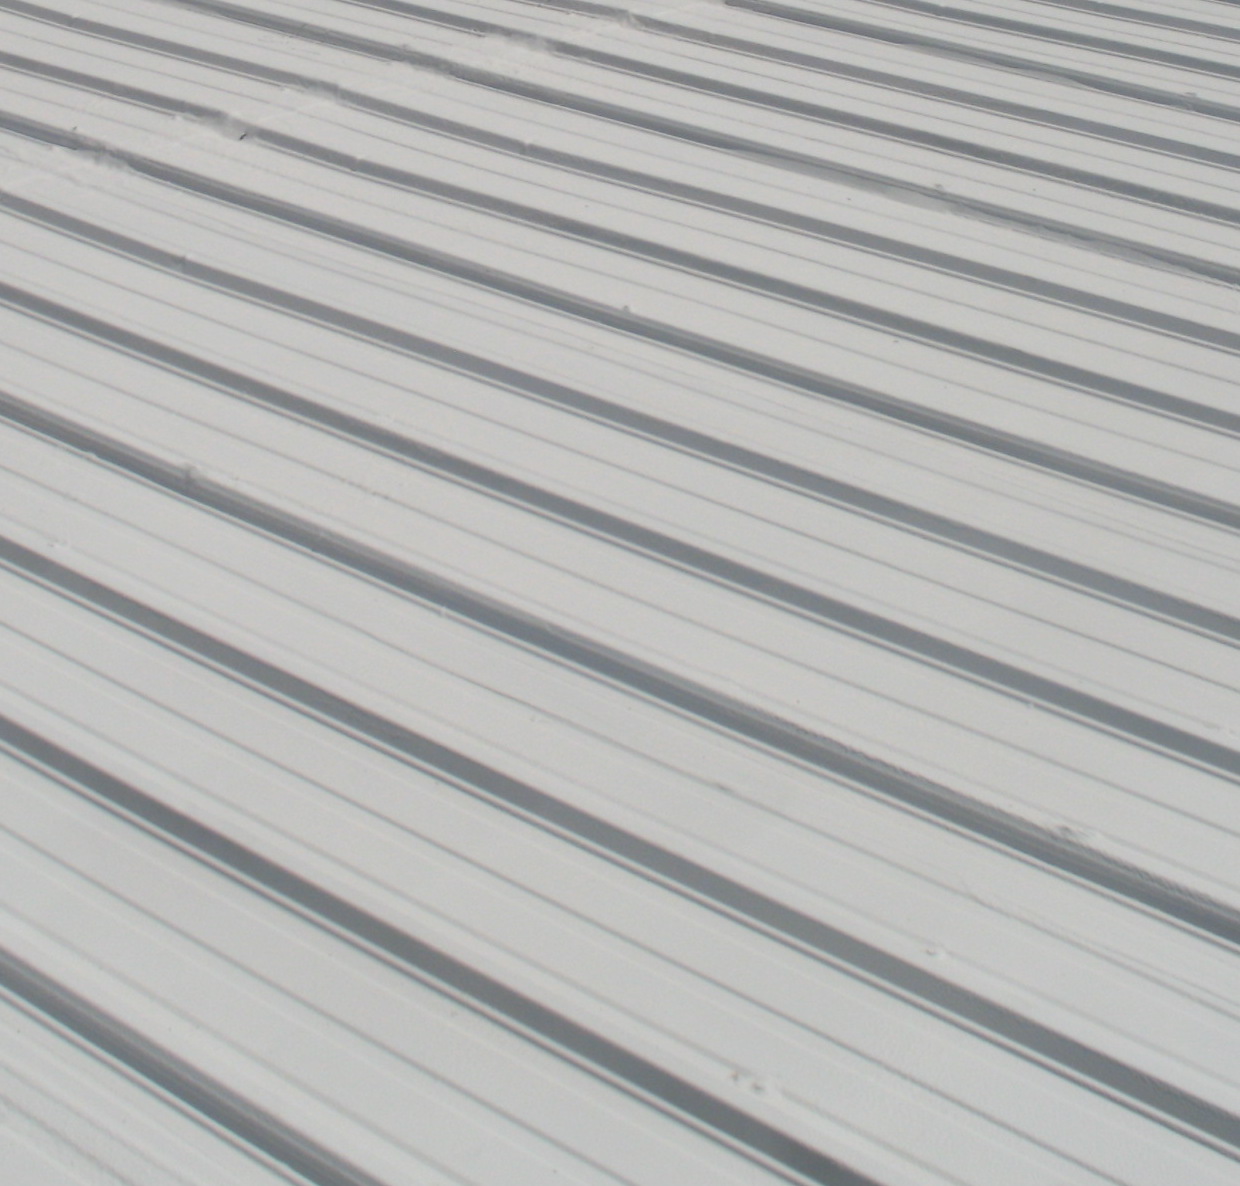 standing seam metal roof texture